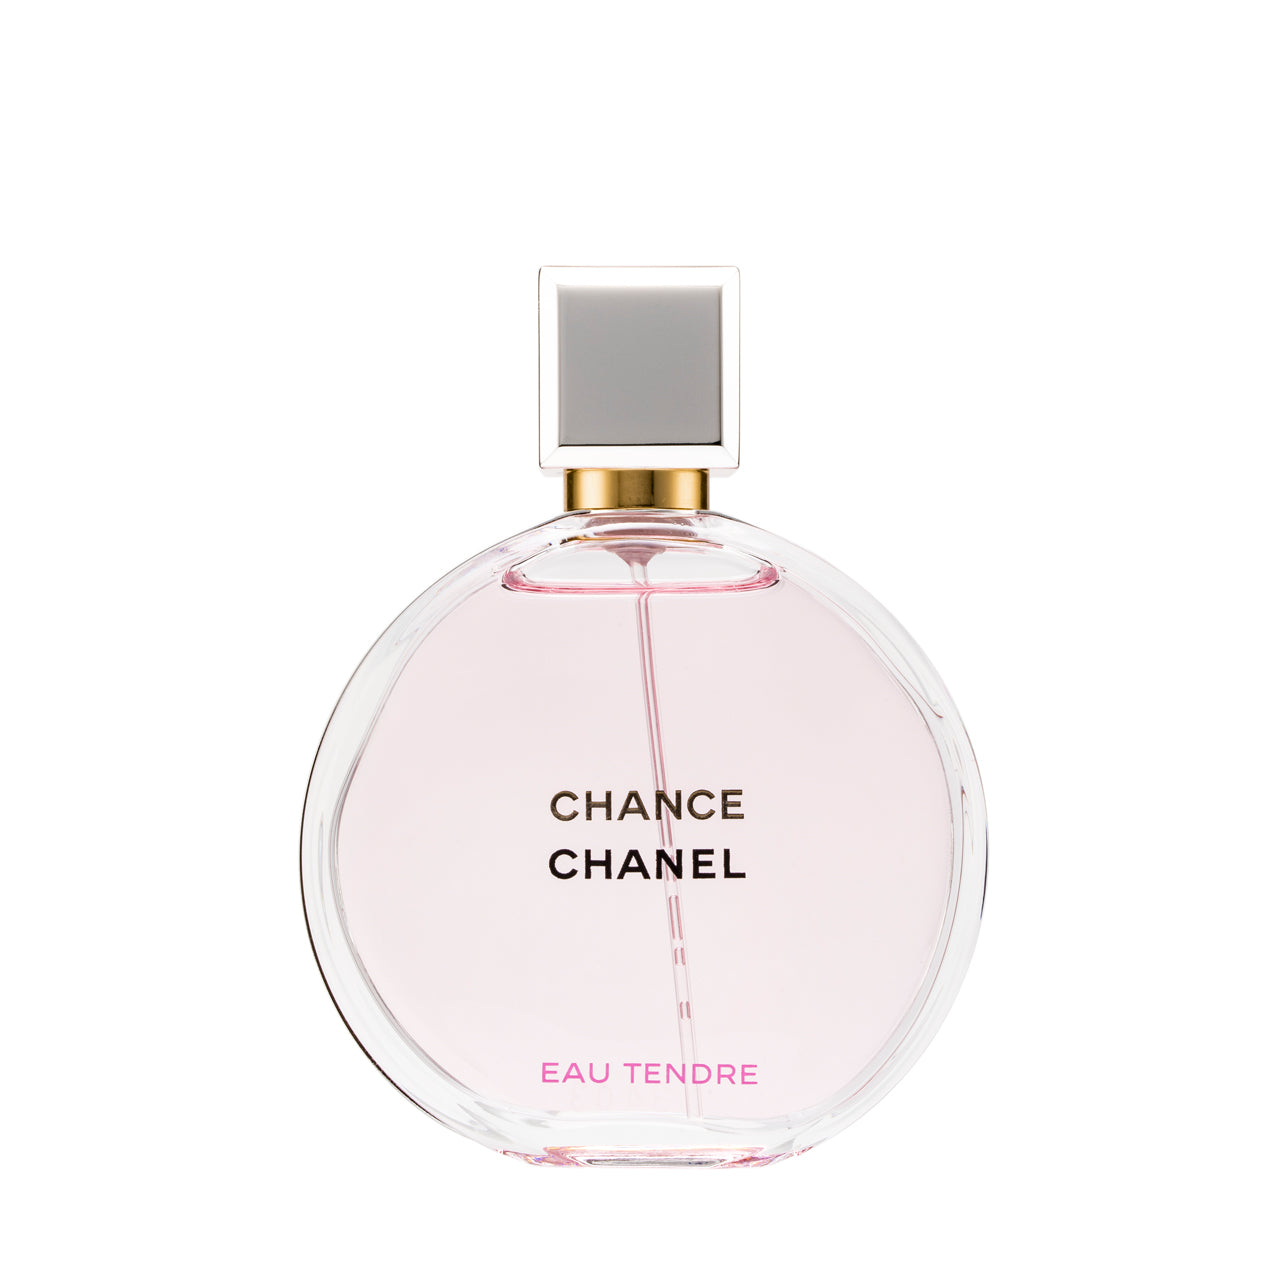 Chance Eau Tendre Chanel perfume - a fragrance for women 2010